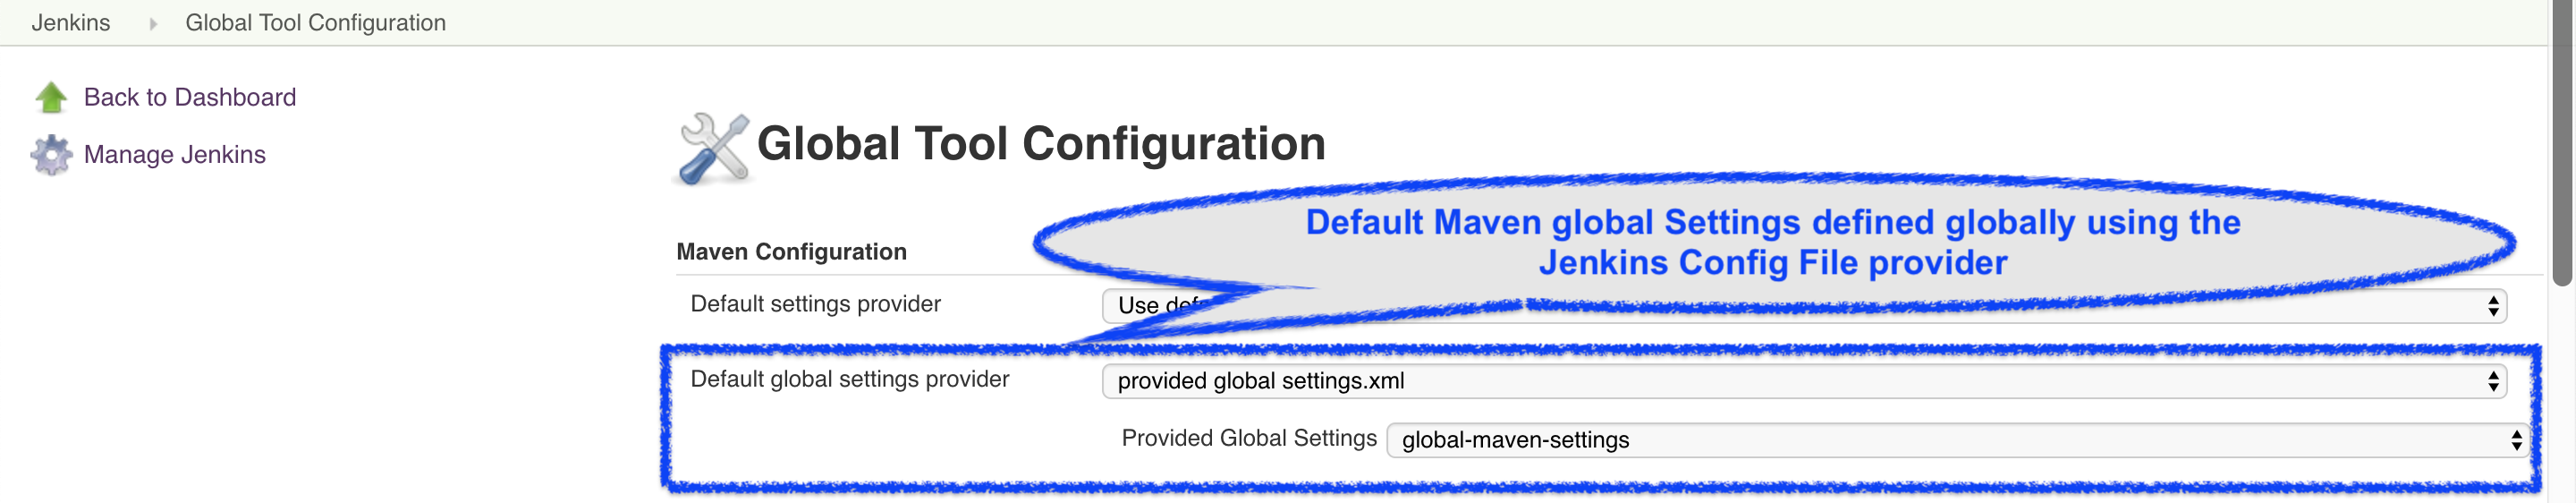 global tools configuration maven settings